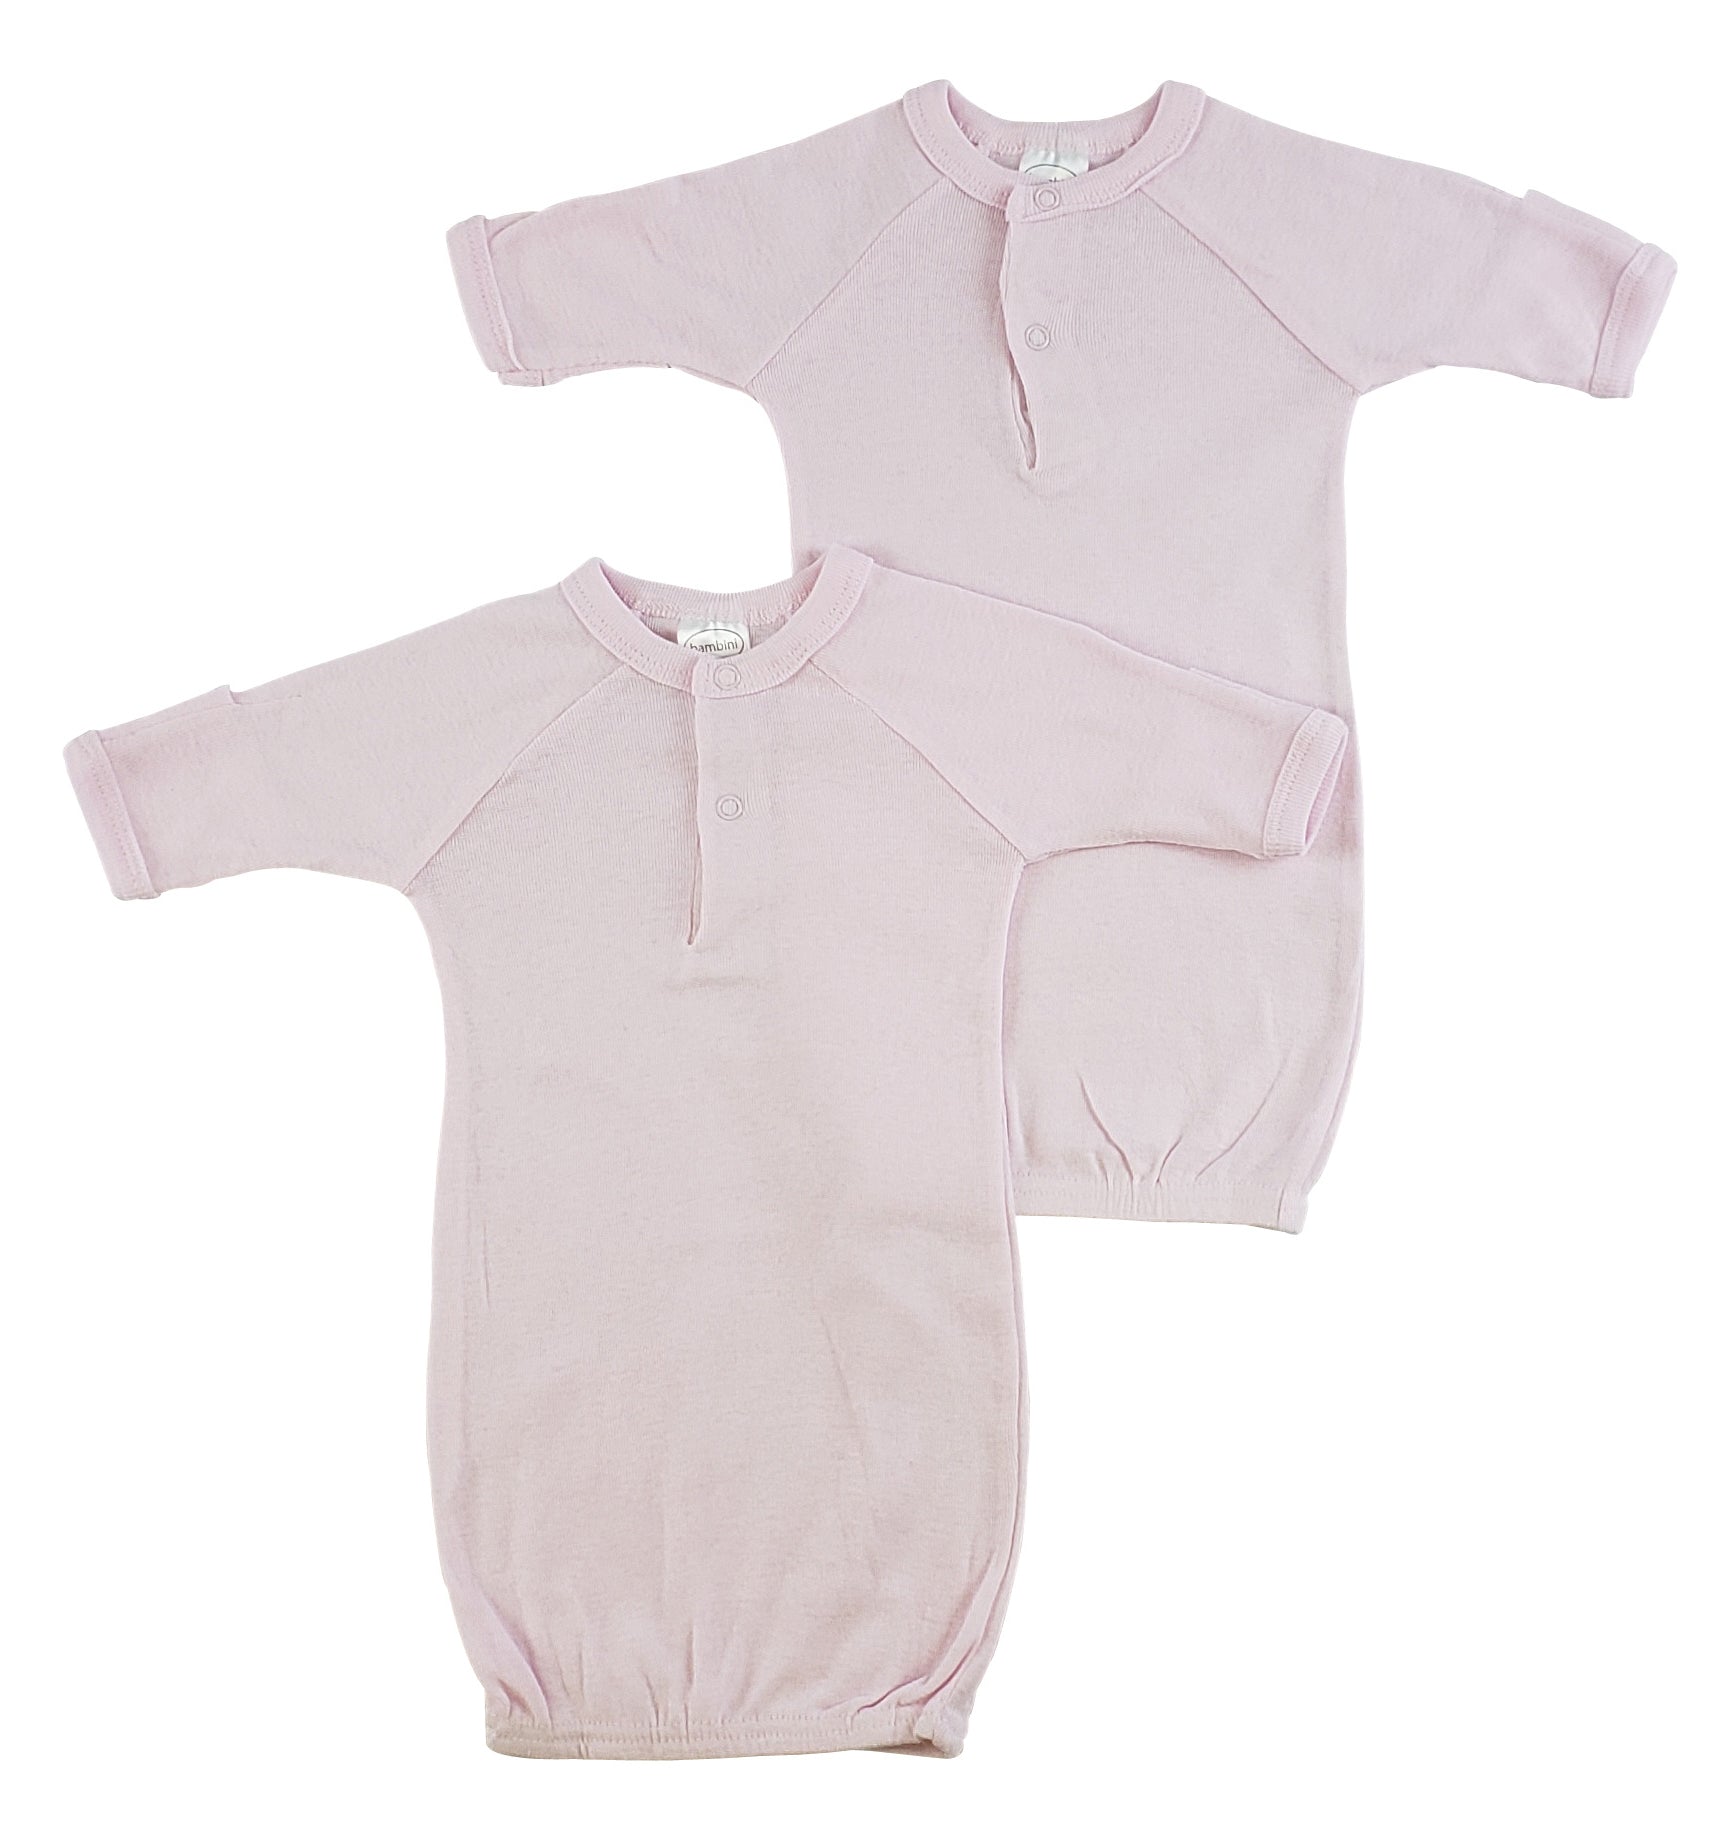 Preemie Solid Pink Gown - 2 Pack 912P